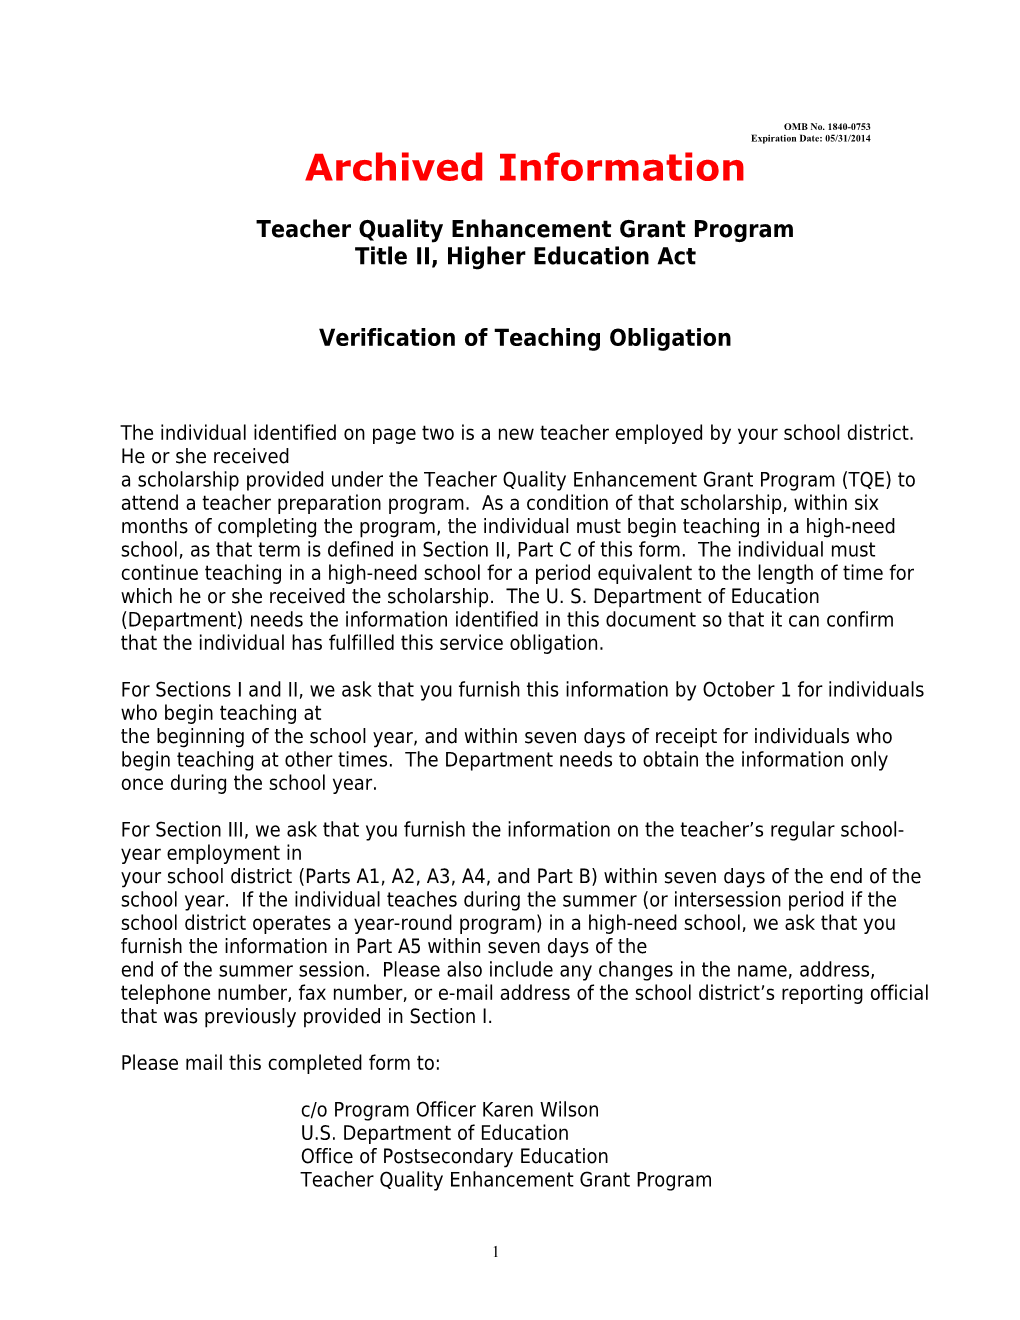 Archived: Verification of Teaching Obligation Form Teacher Quality Enhancement Grants Program